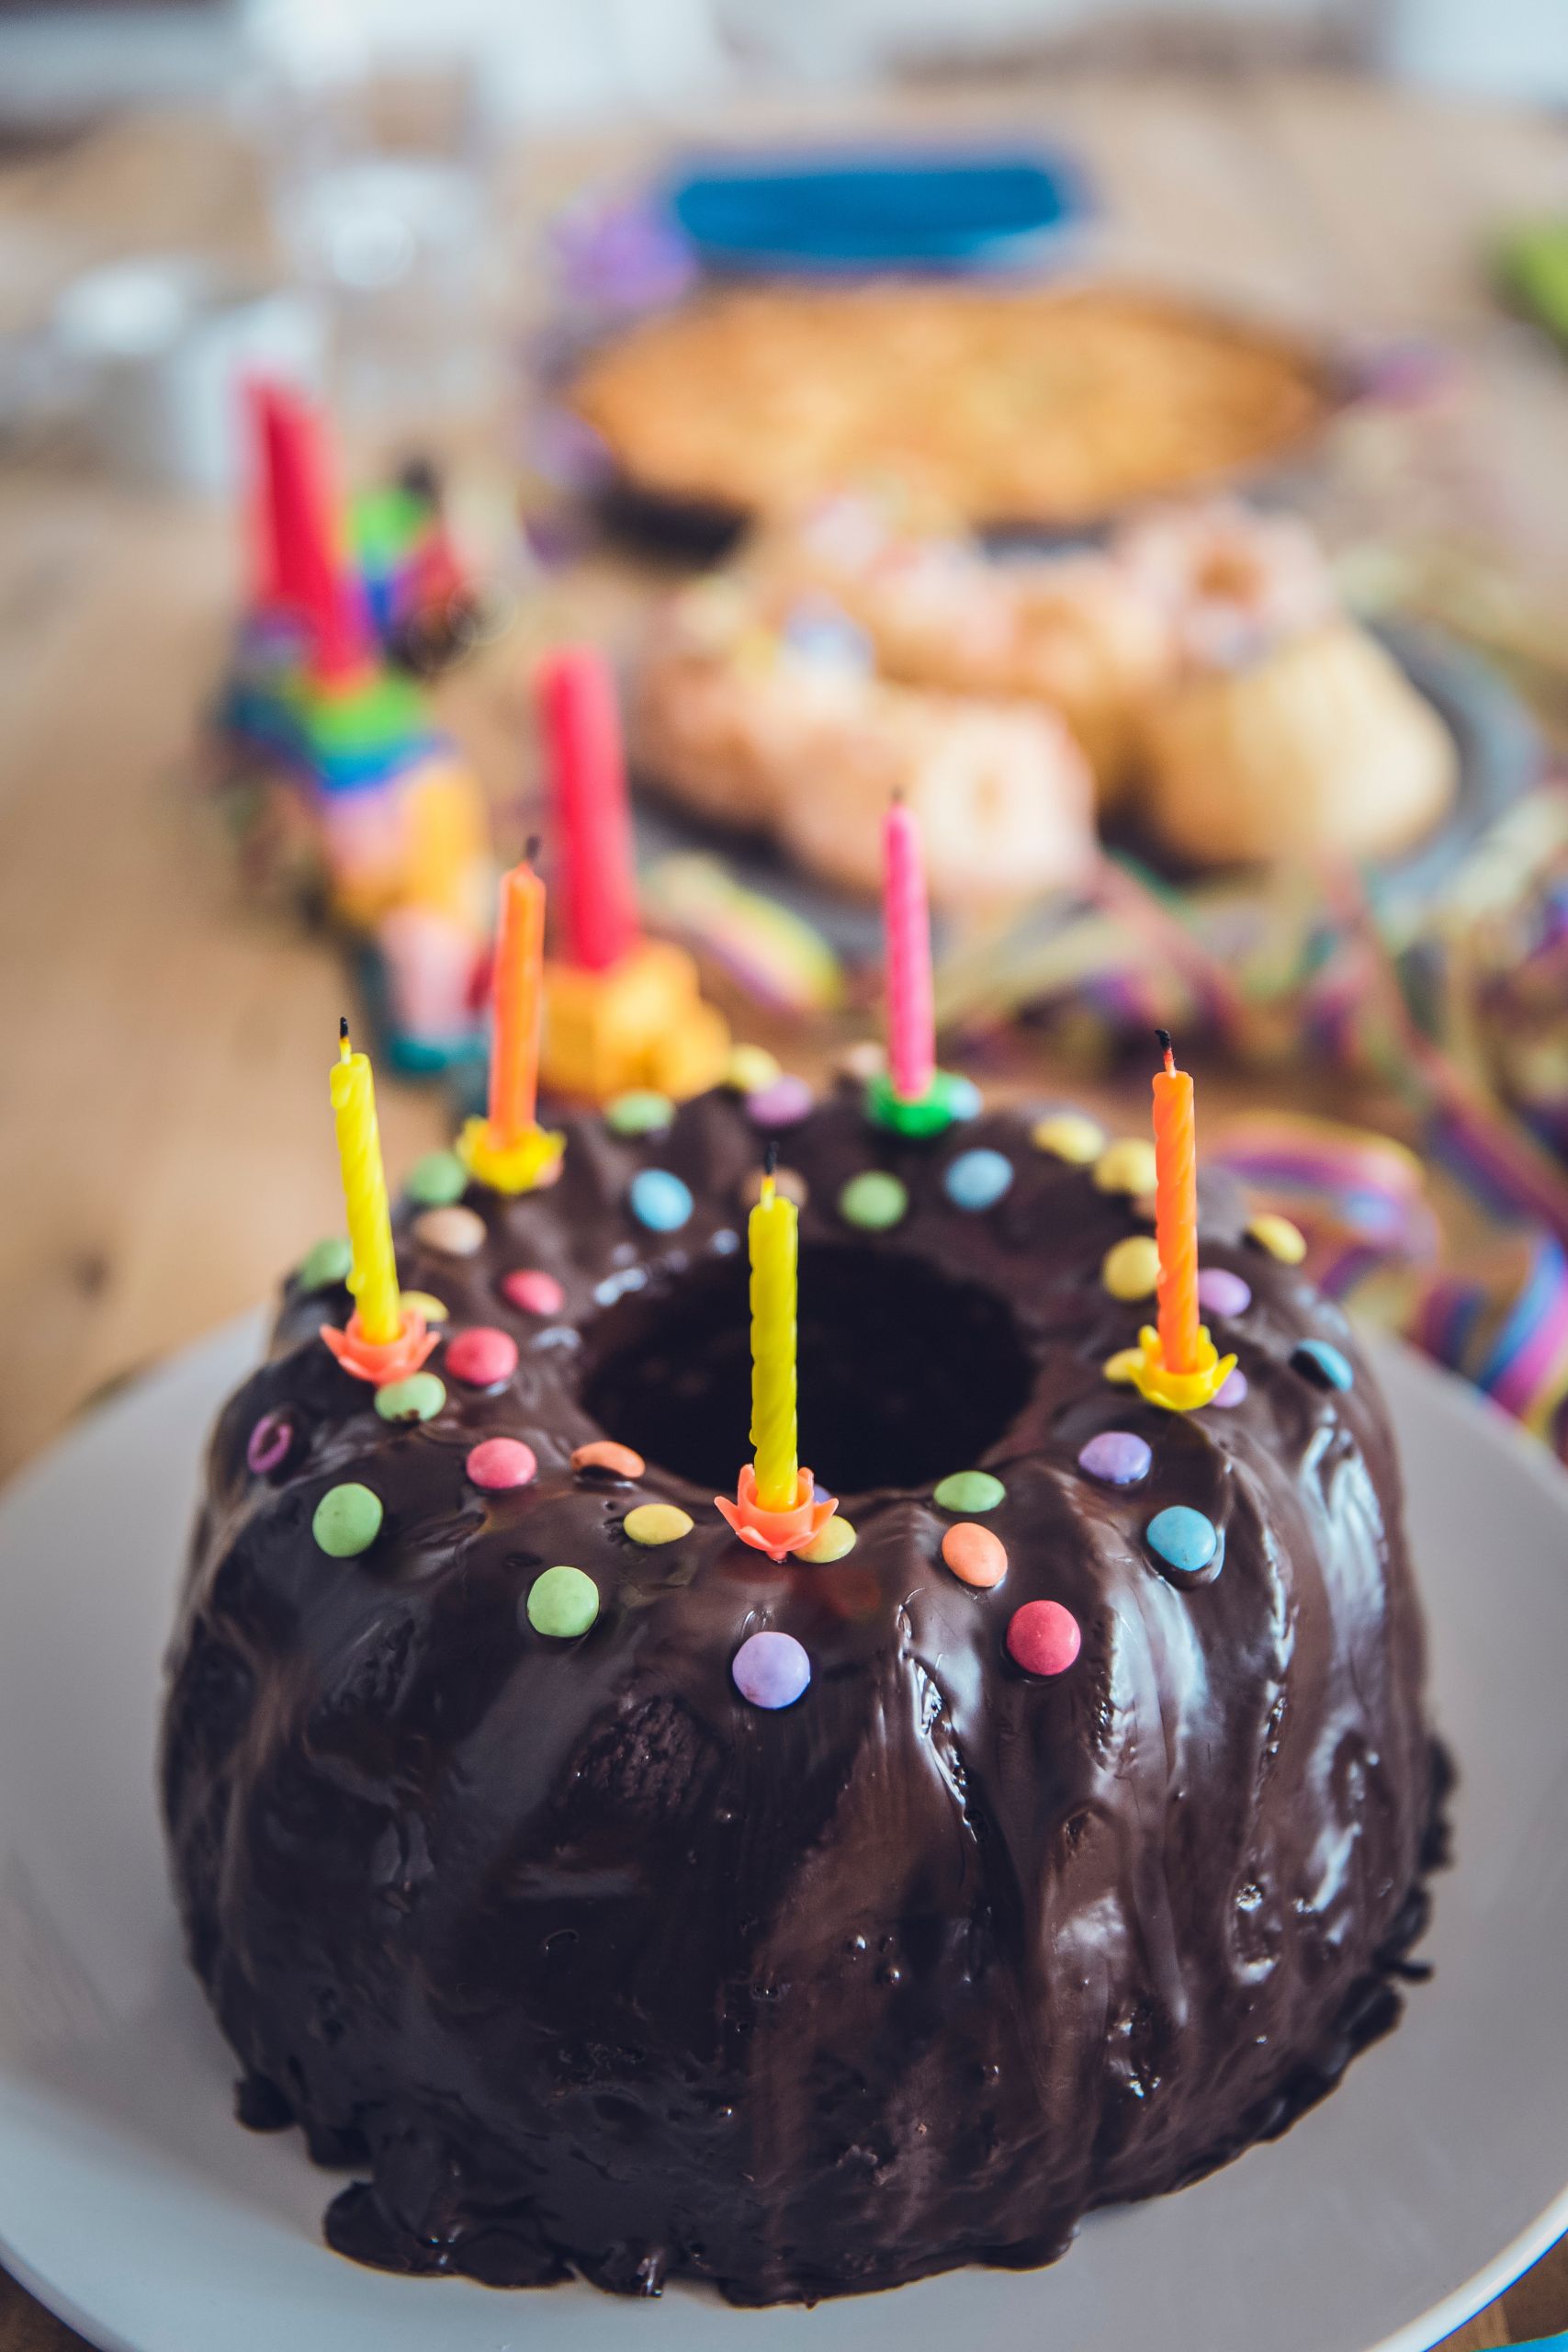 Birthday Cake Images
 500 Amazing Birthday Cake s · Pexels · Free Stock s